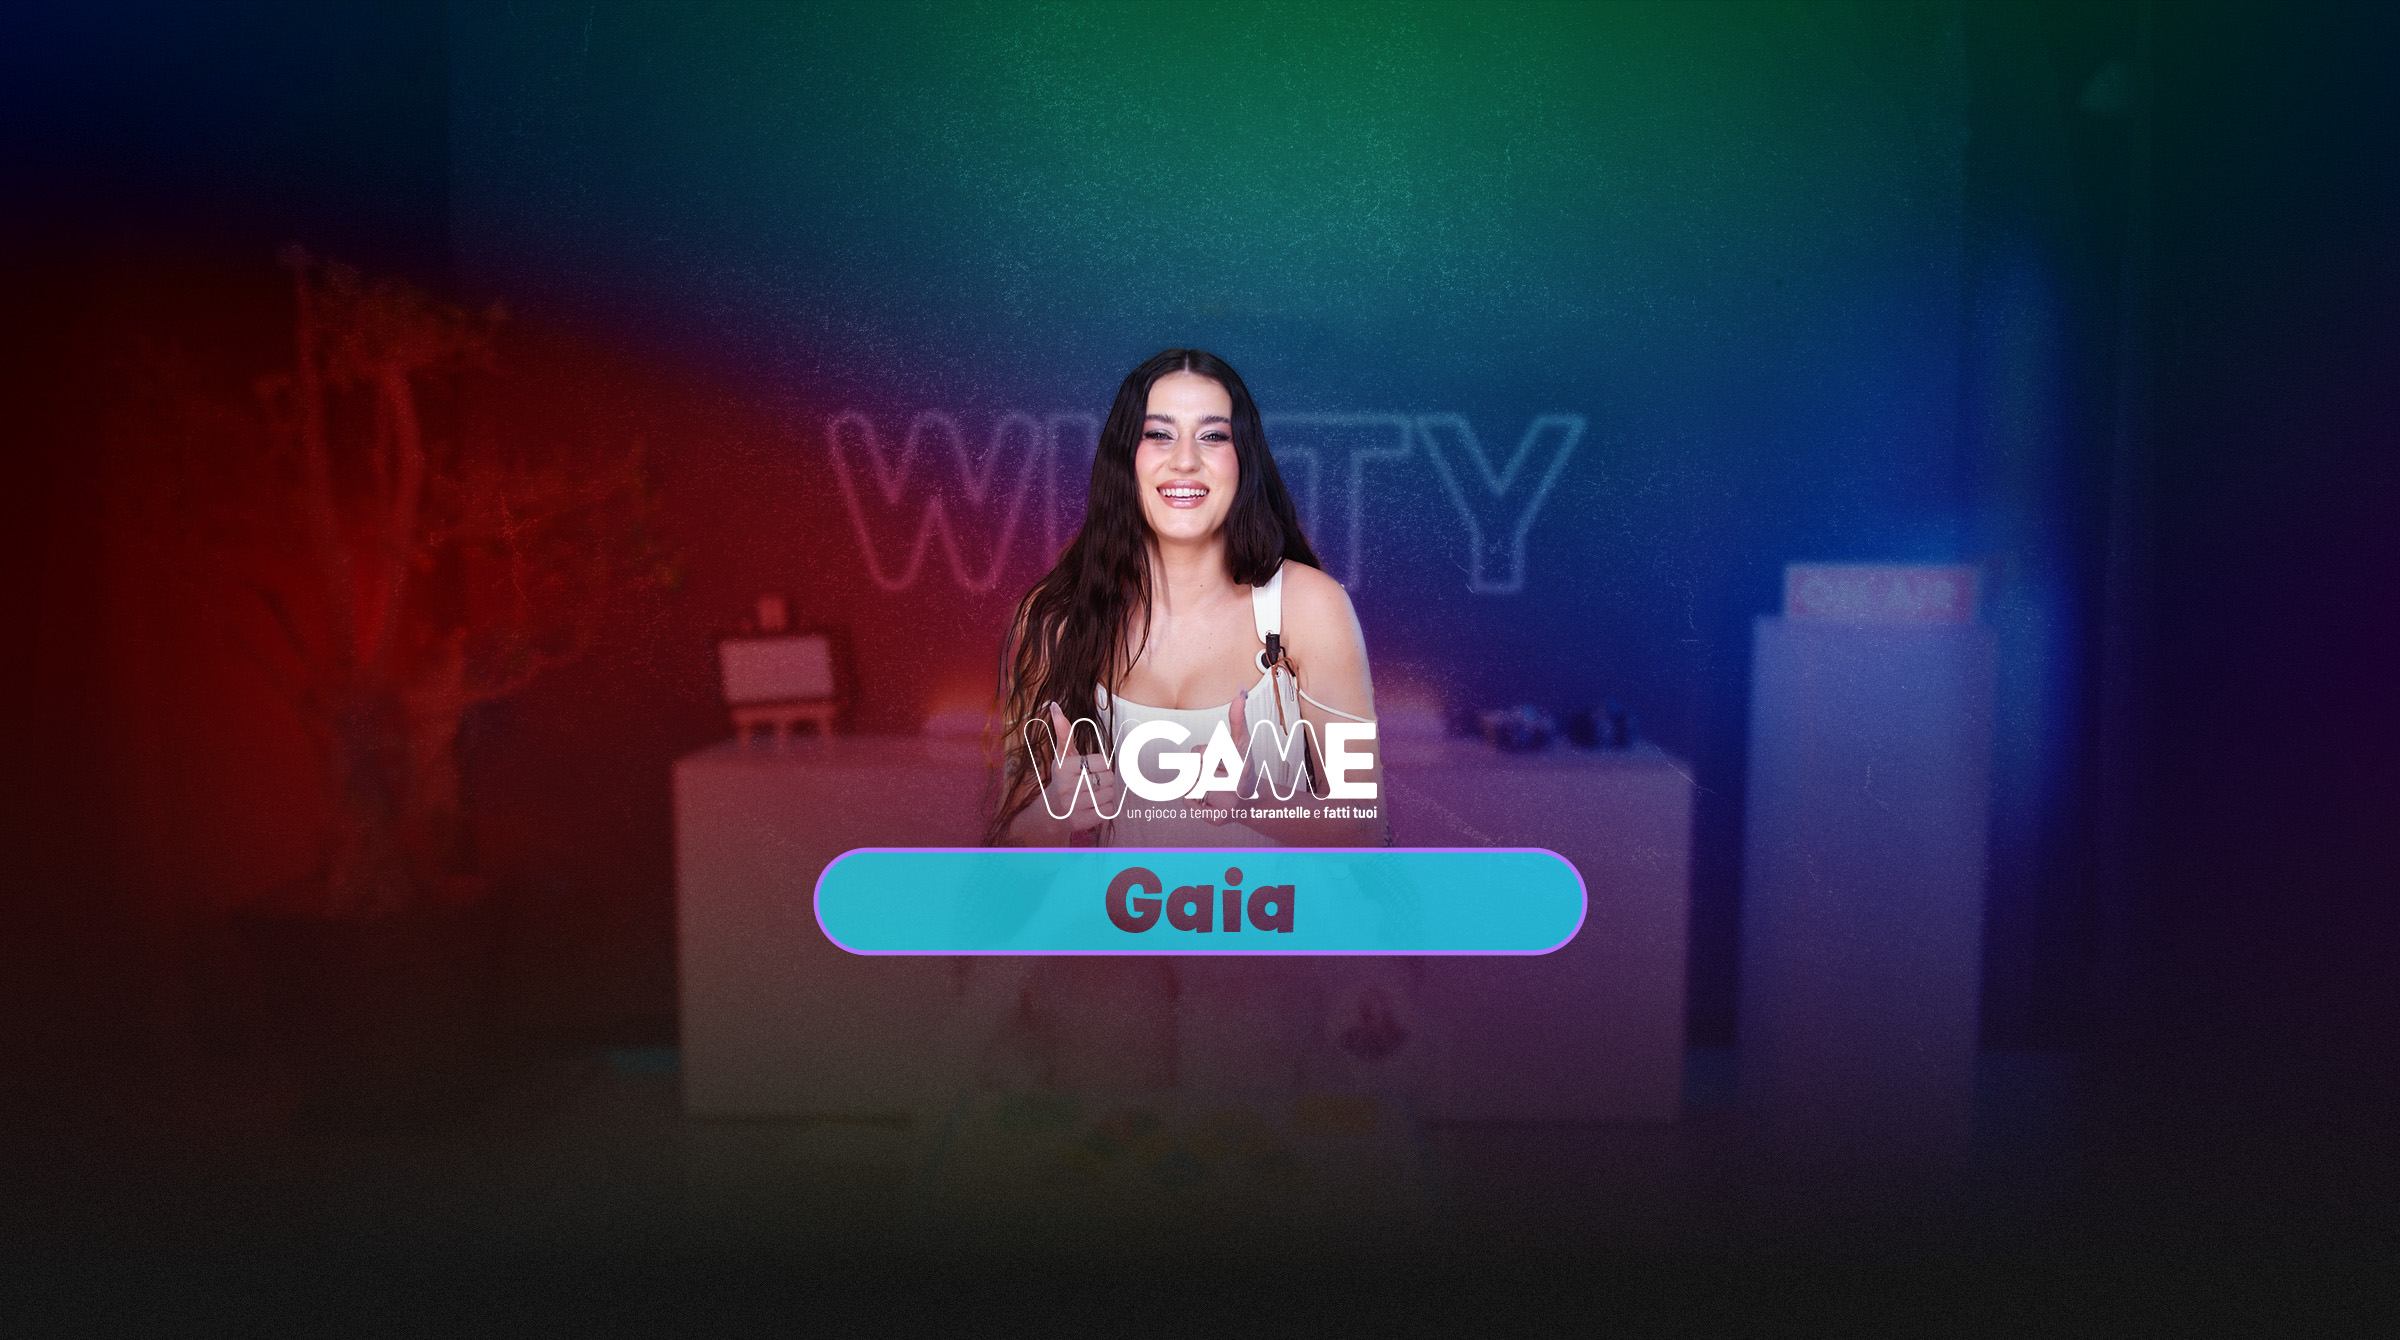 WITTY_W Game Gaia SLIDER